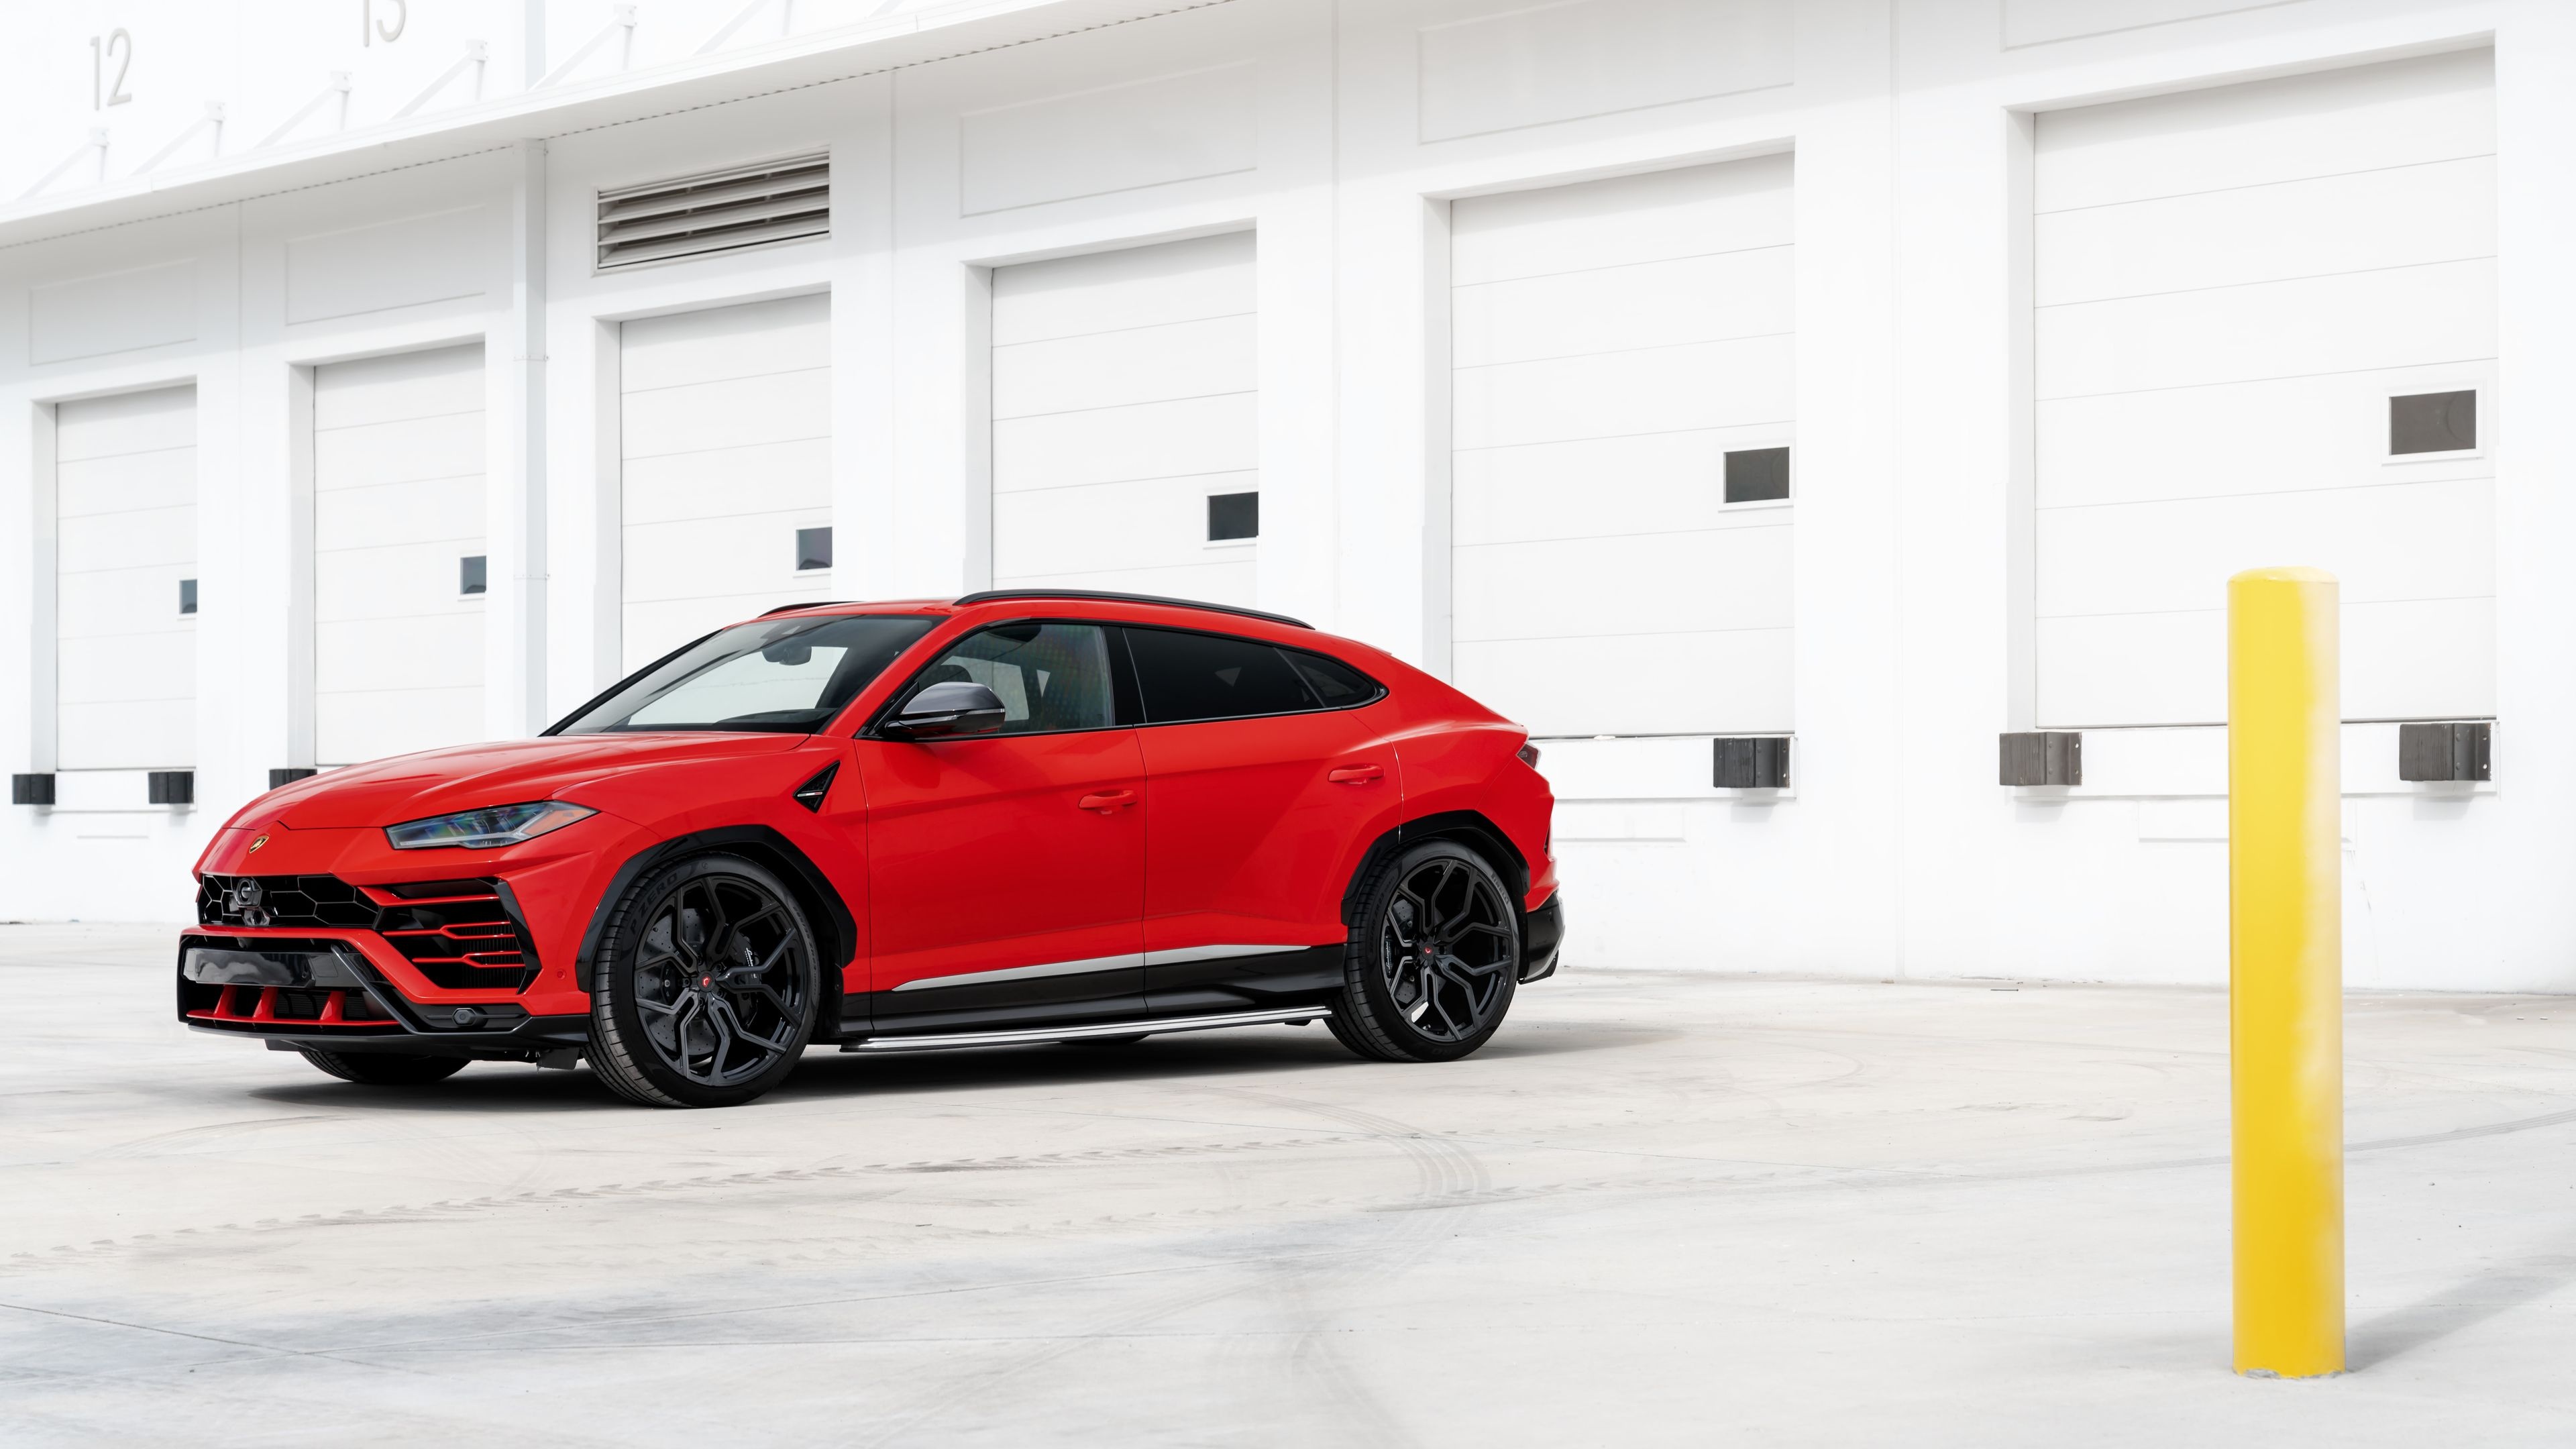 Lamborghini Urus, Red SUV, 2019 model, High-definition wallpapers, 3840x2160 4K Desktop